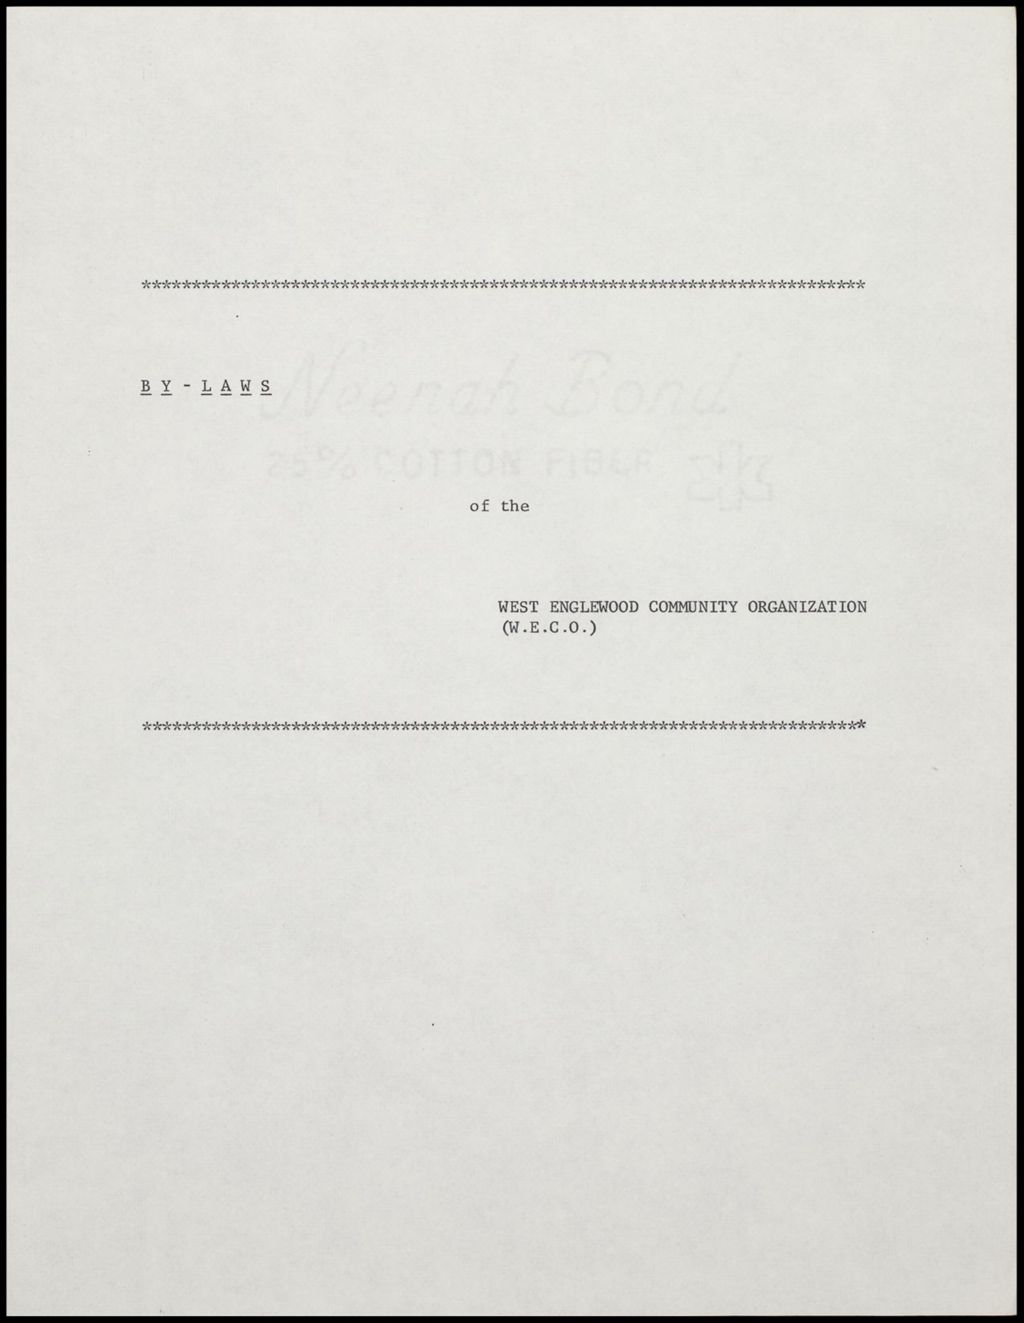 Miniature of West Englewood Community Organization, 1976 (Folder III-1828)